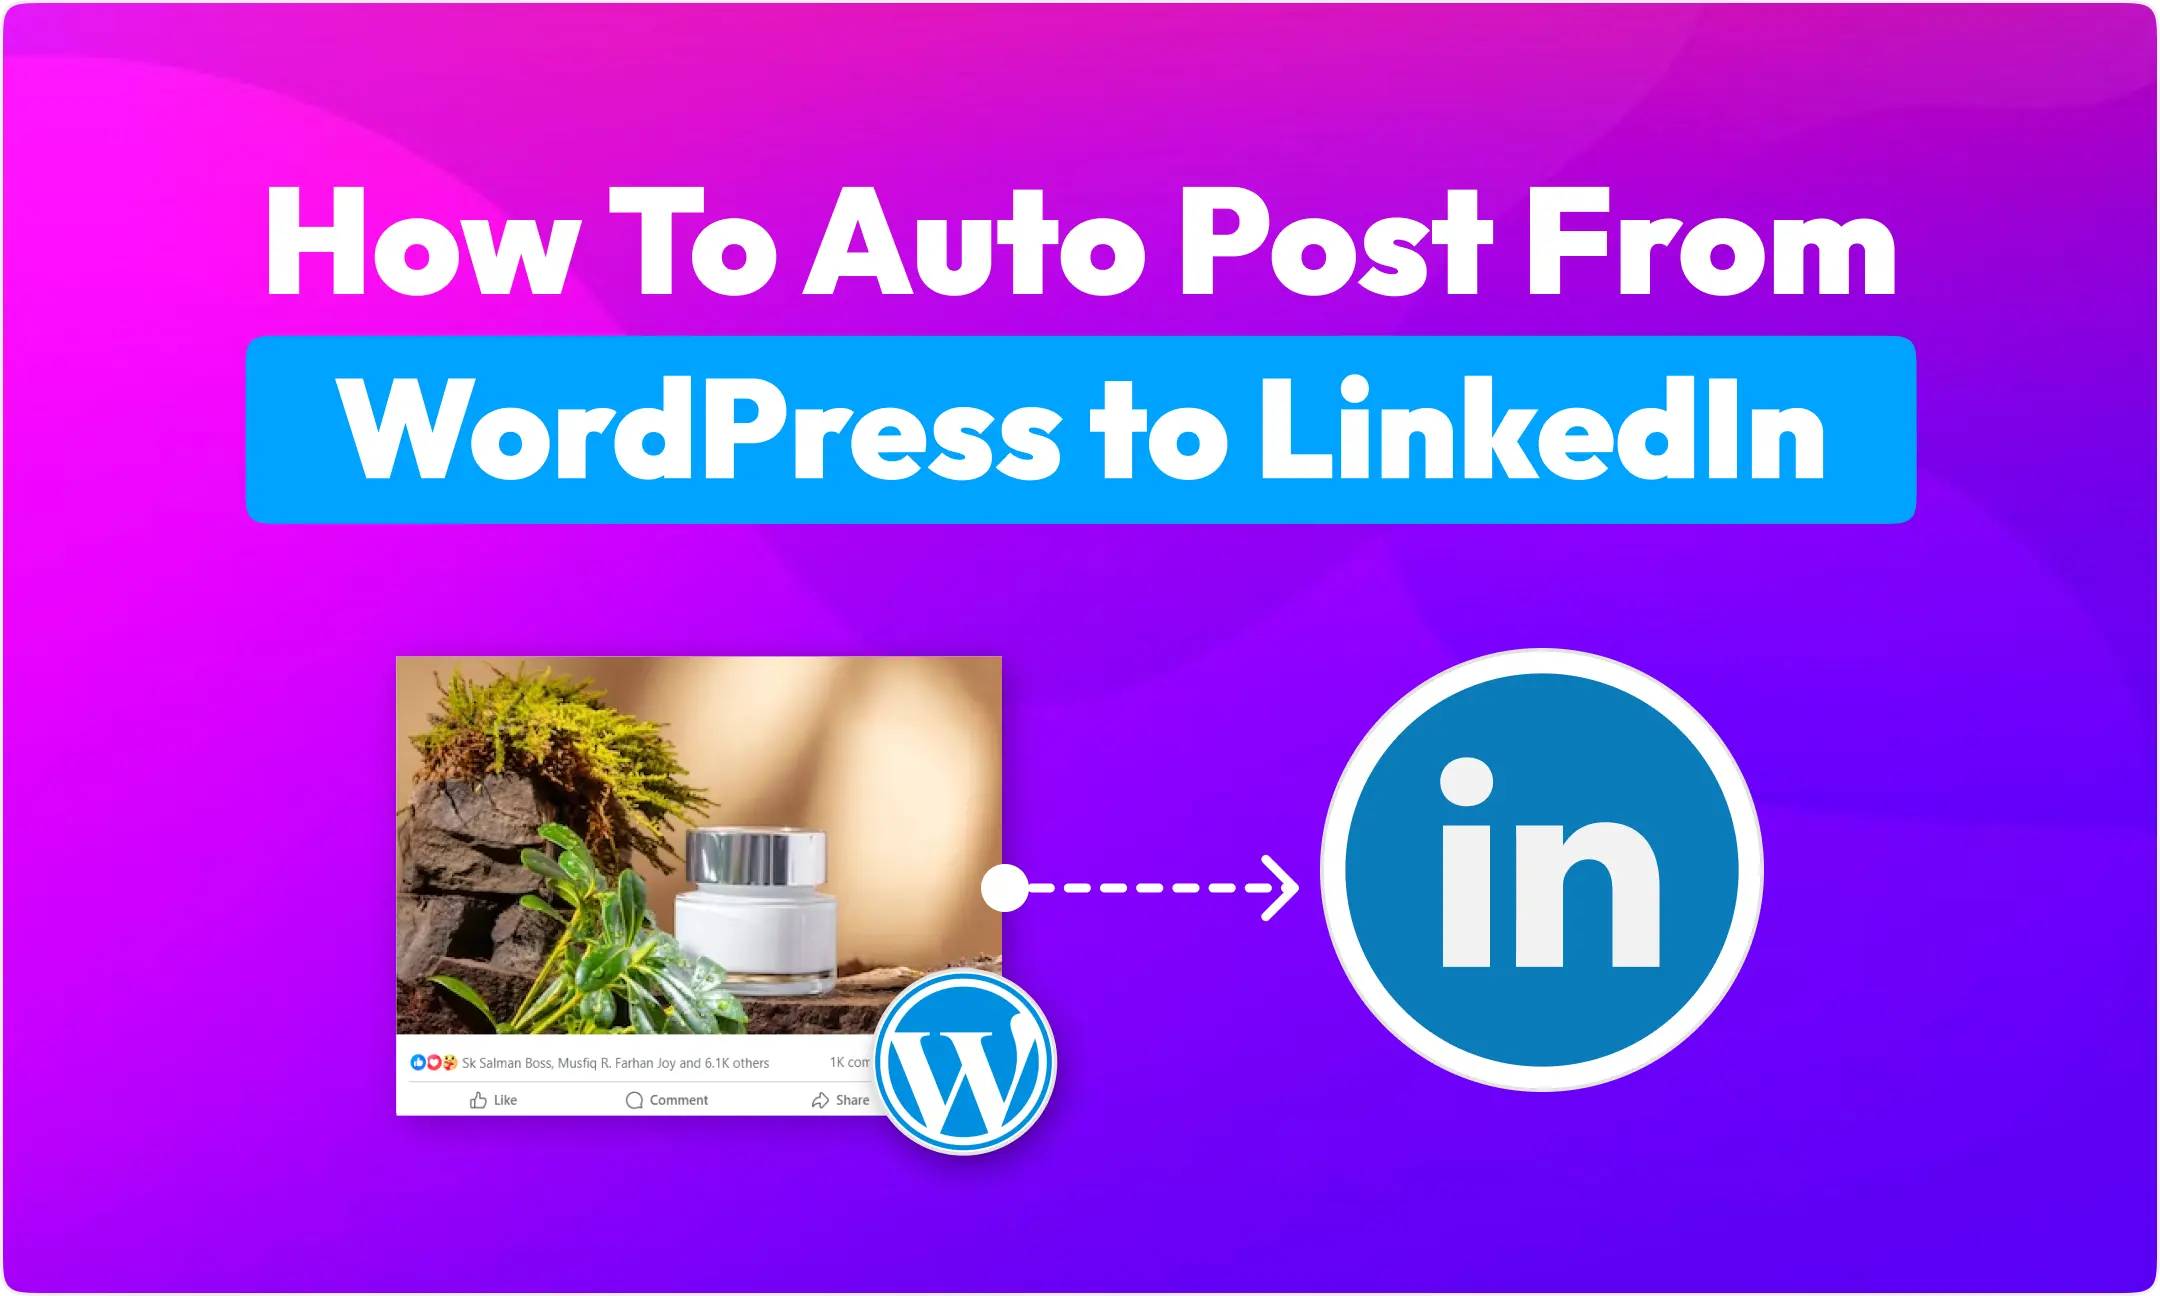 Auto-post from WordPress to LinkedIn